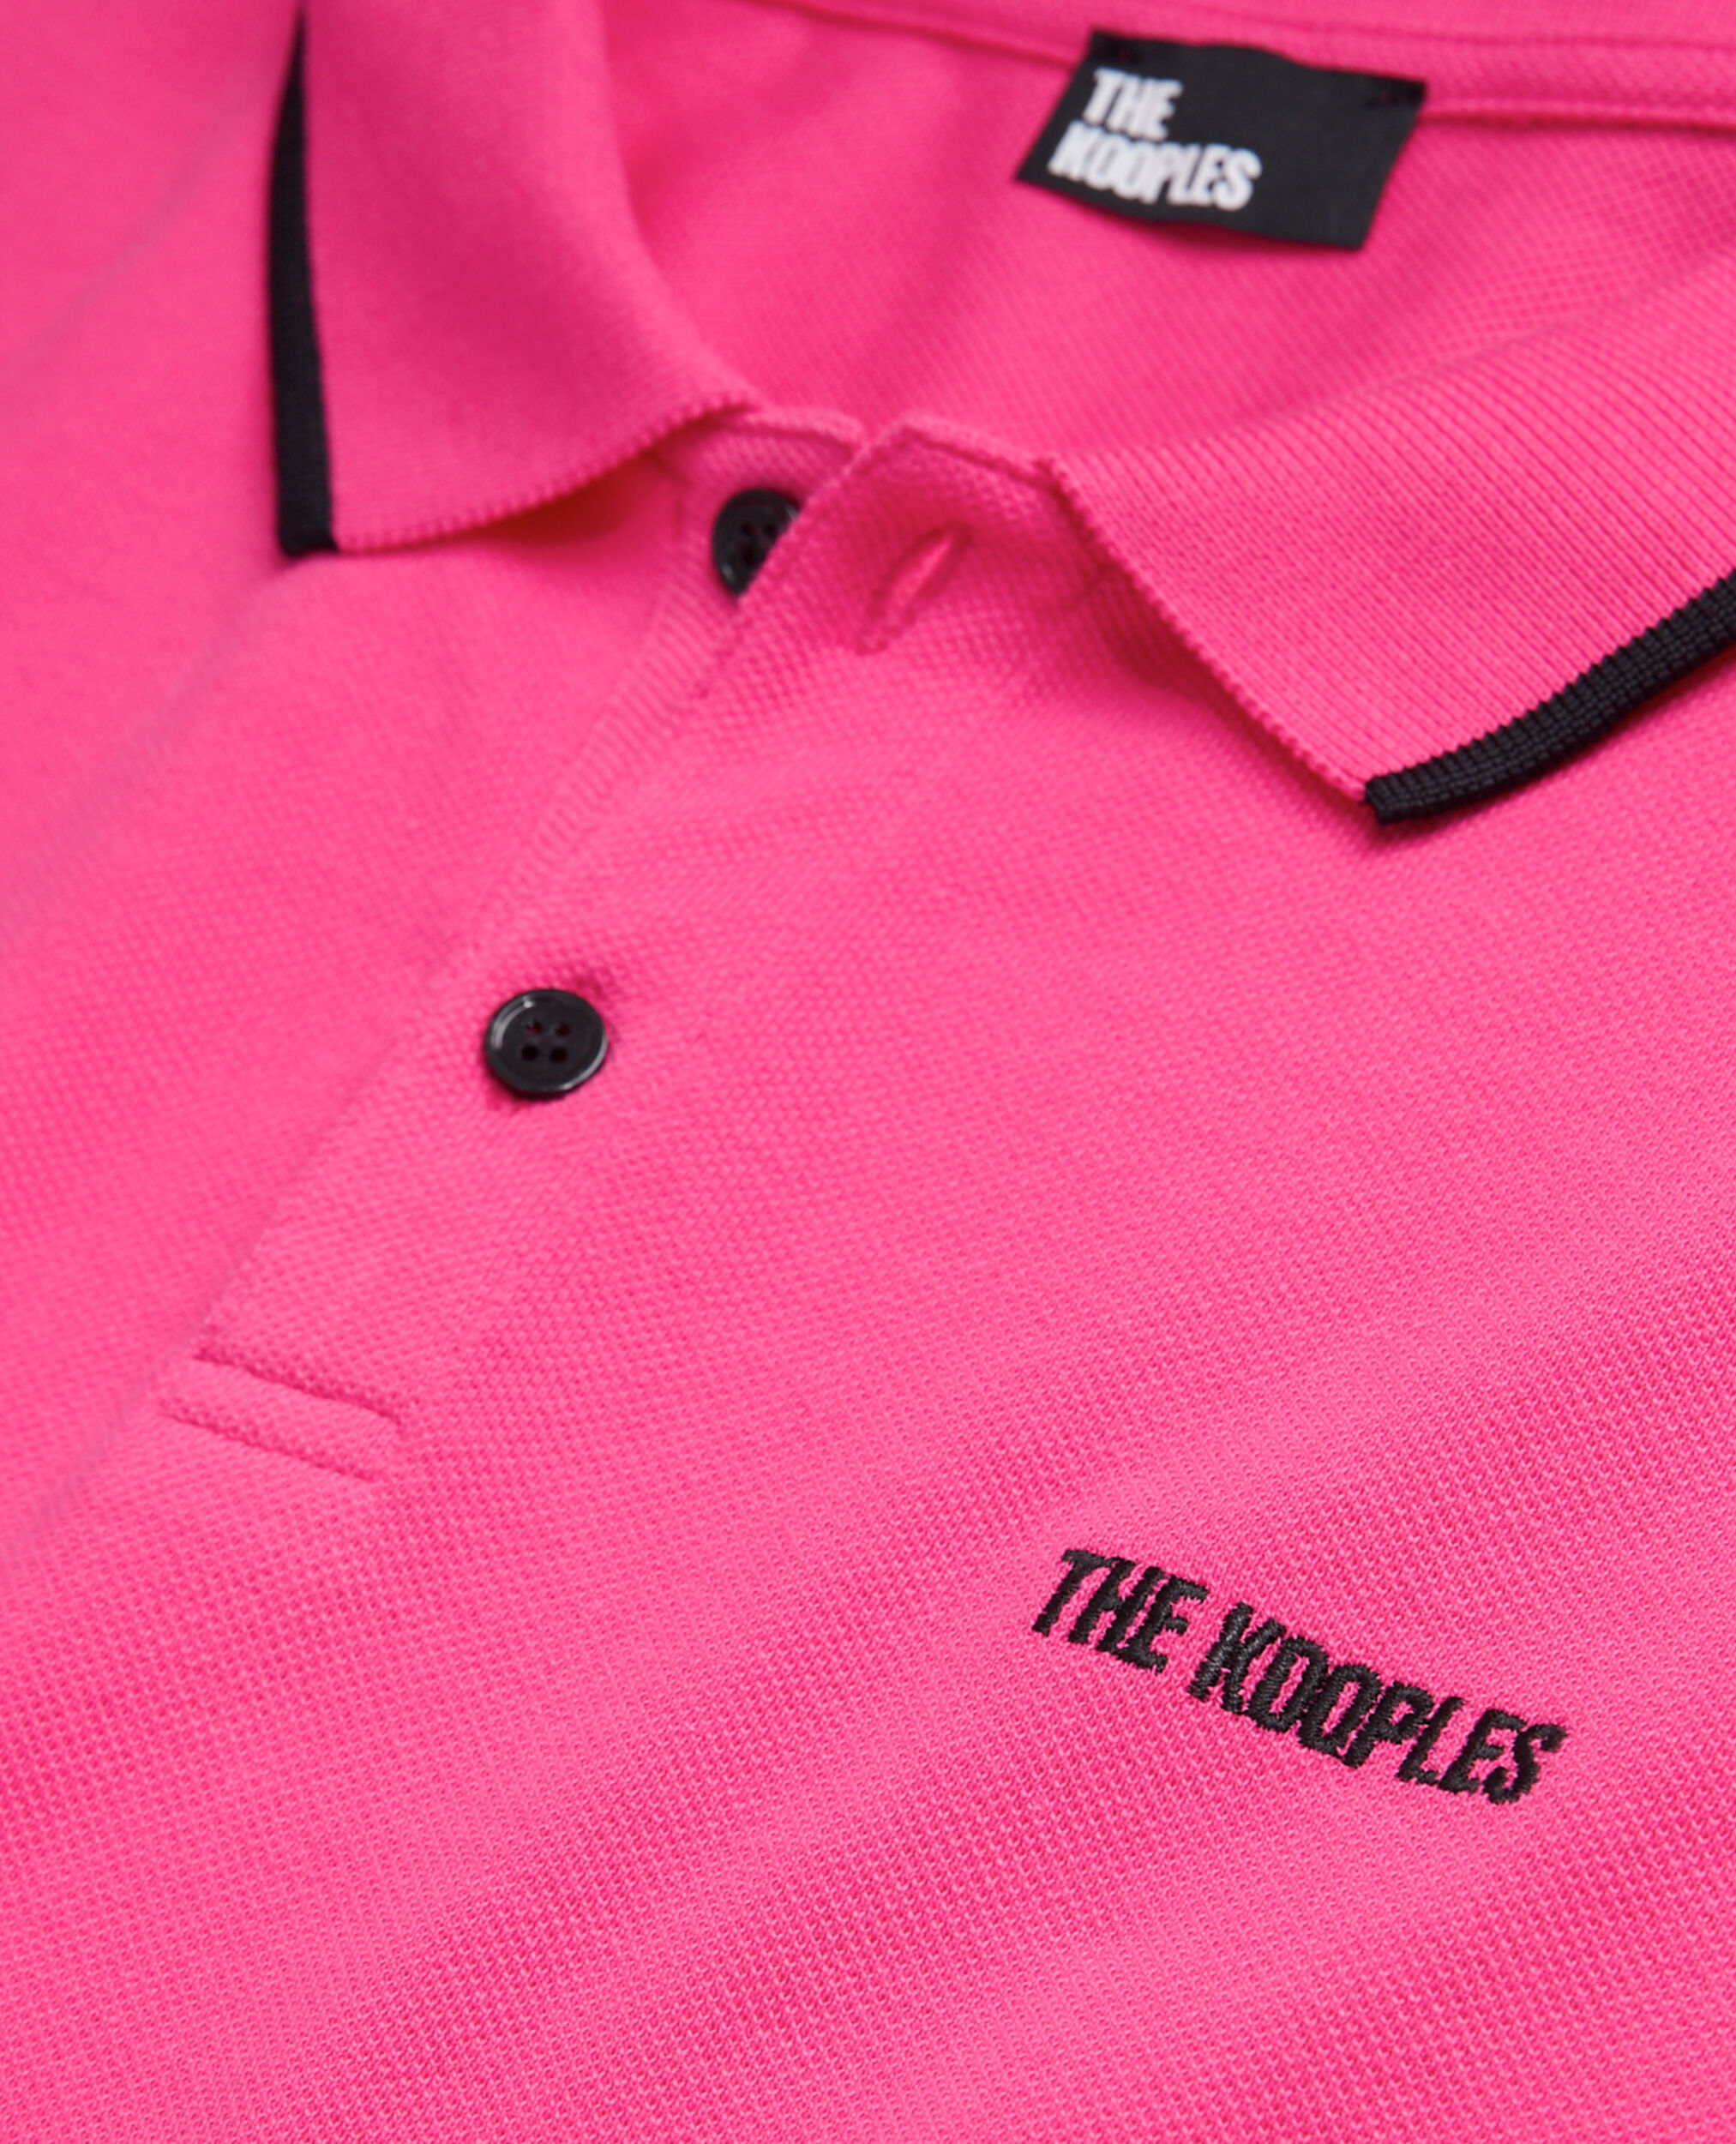 Camisa polo rosa logotipo, PINK, hi-res image number null